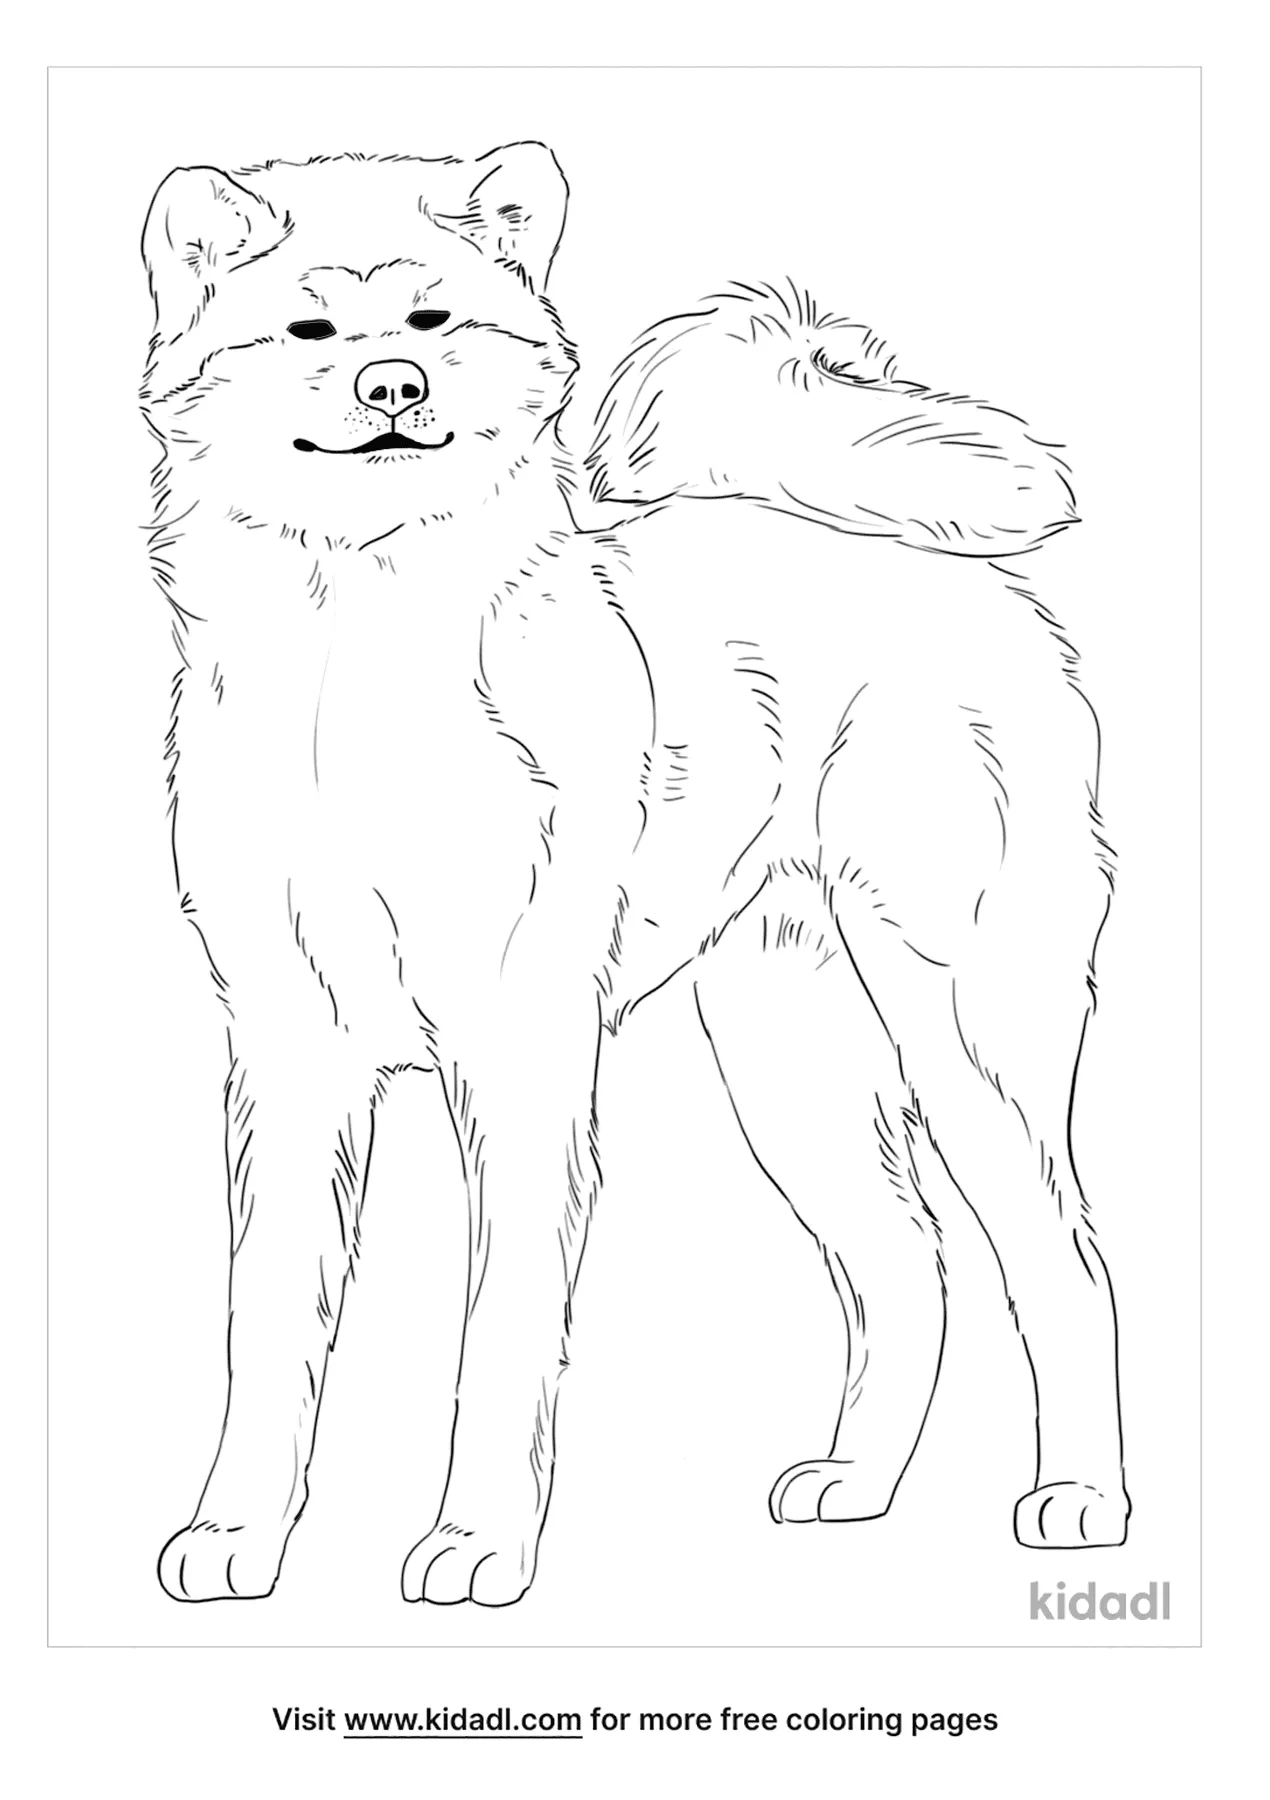 Akita Inu Coloring Page   Free Dogs Coloring Page   Kidadl